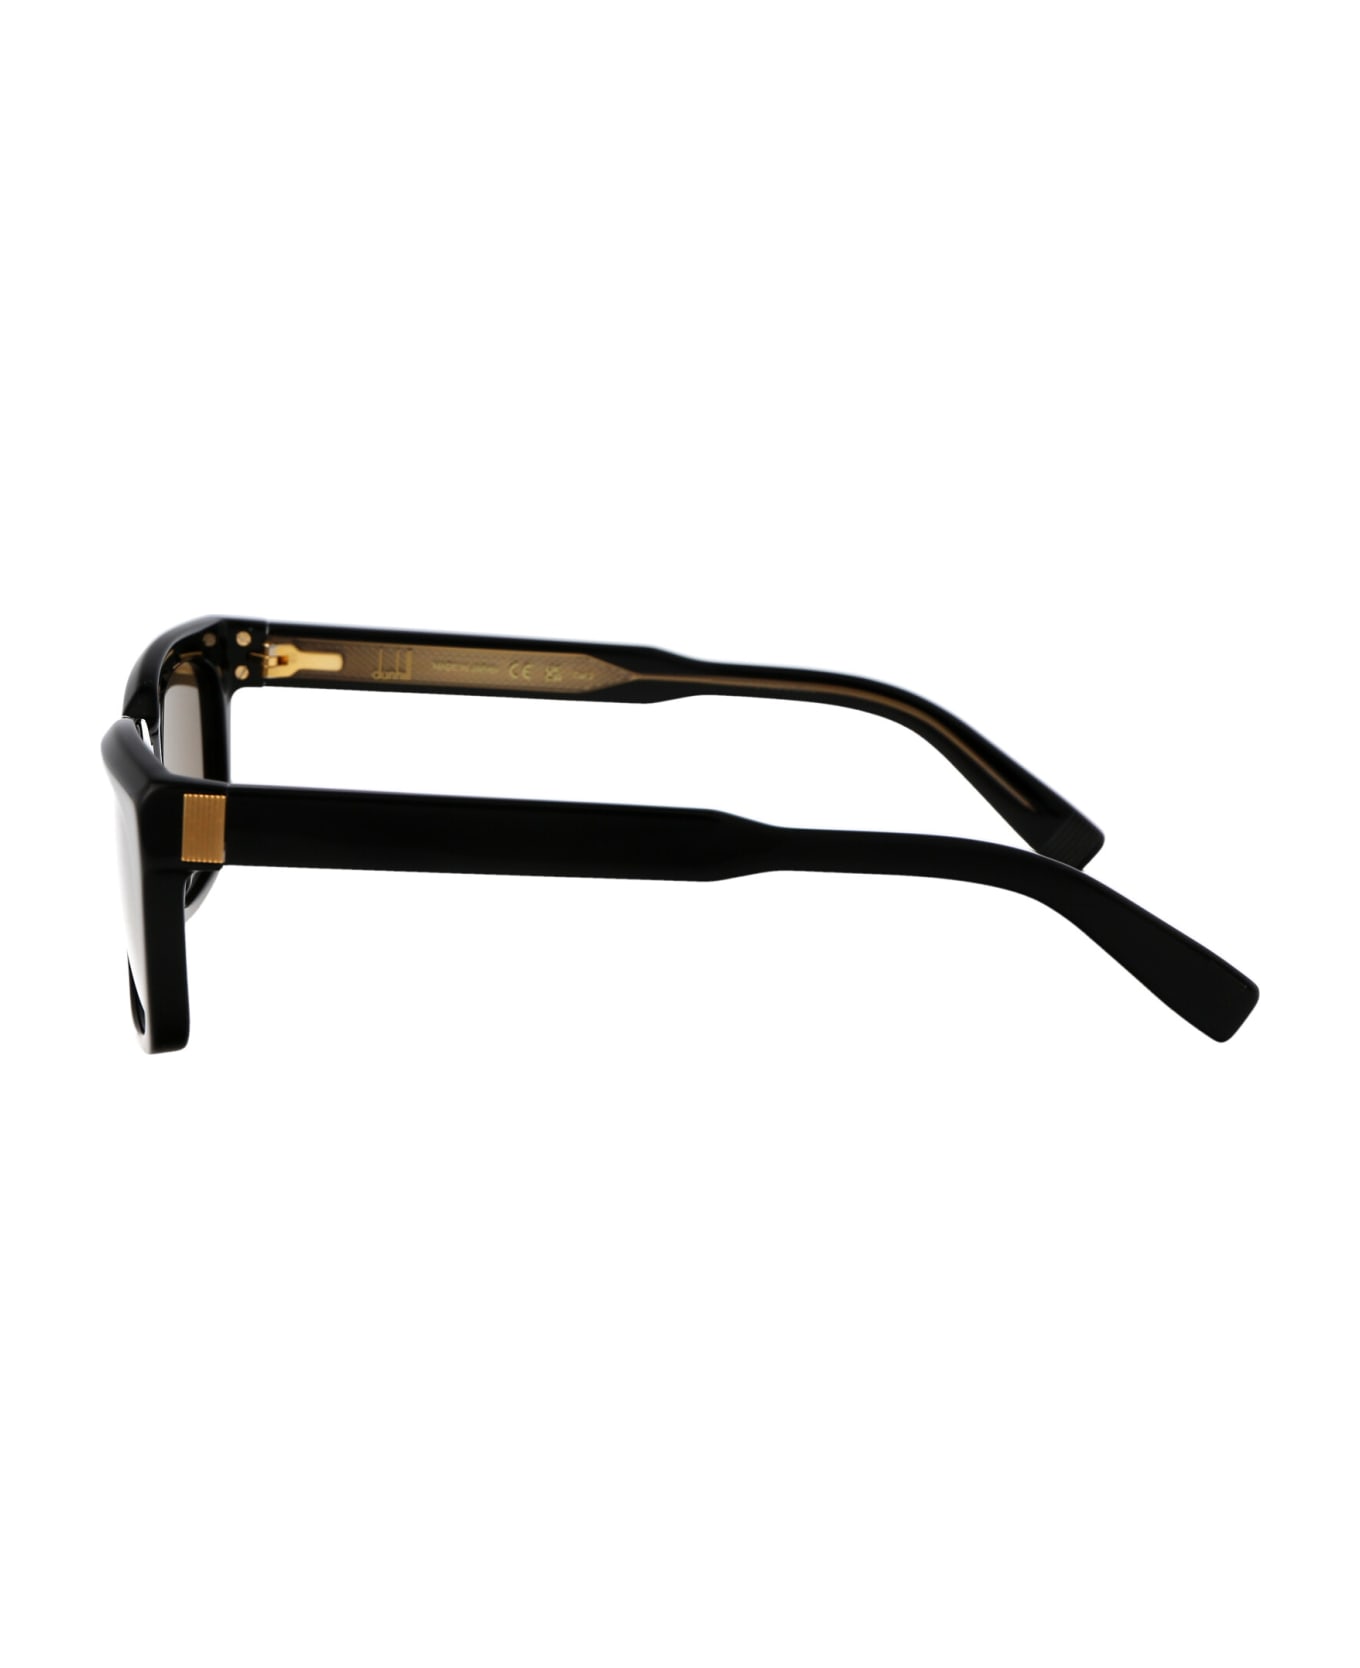 Dunhill Du0056s Sunglasses - 001 BLACK BLACK BROWN サングラス